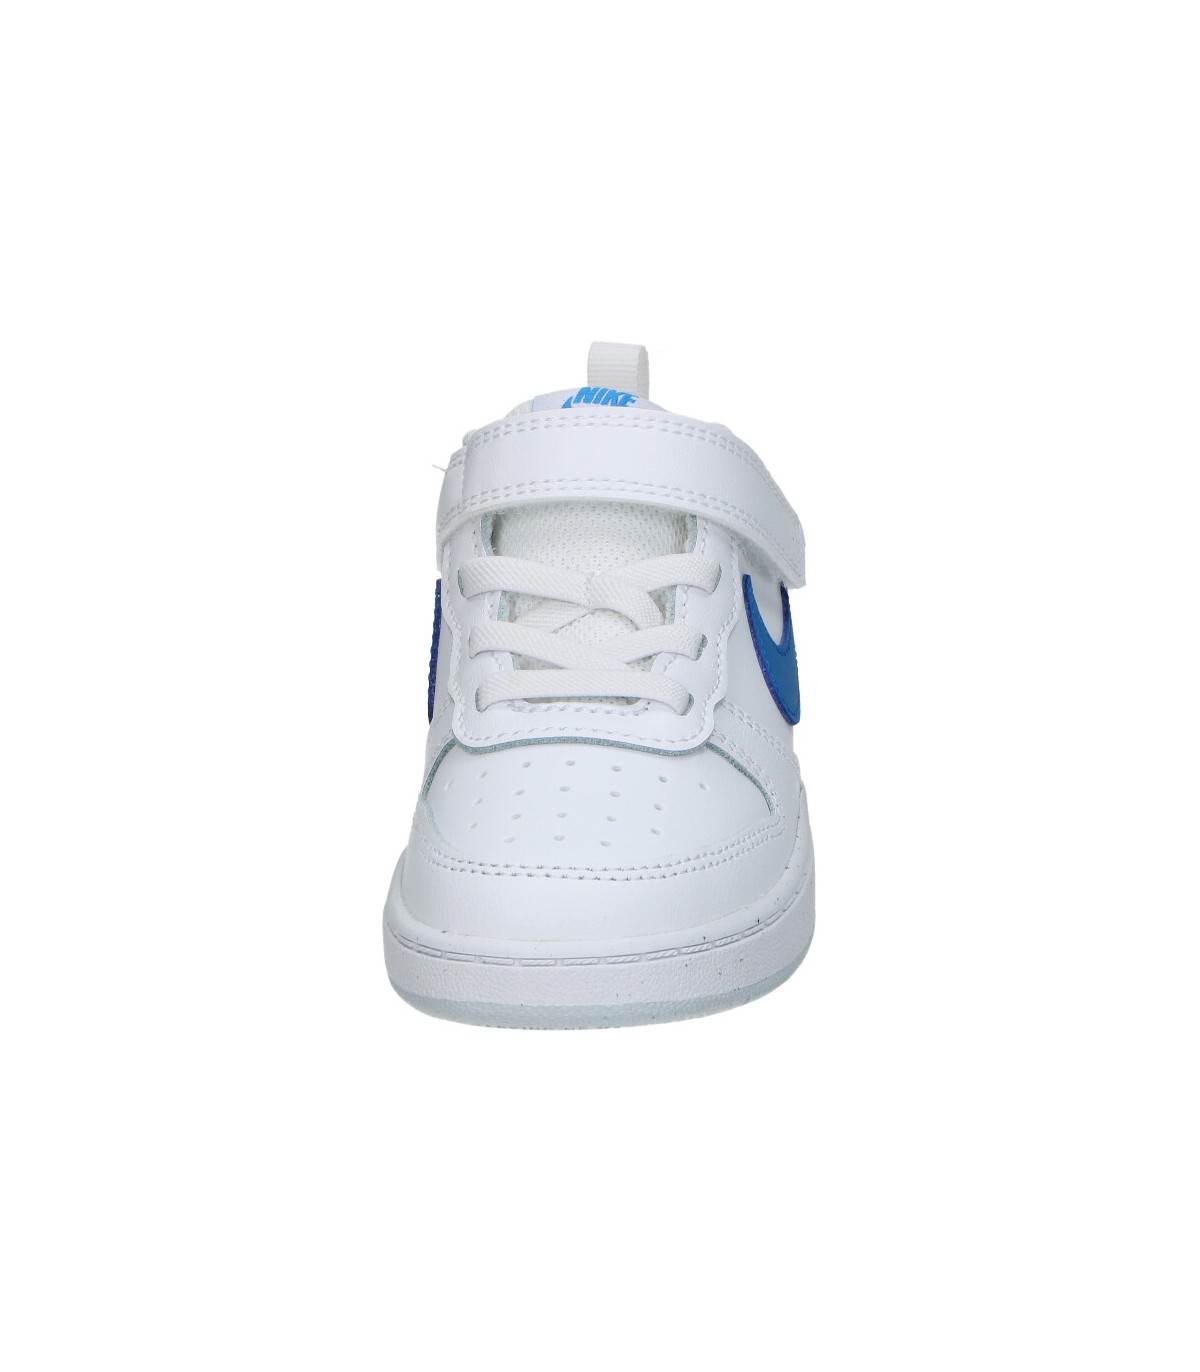 NIKE - Zapatillas blancas y azules Court Borough Low 2 BQ5451 117 Niño/a